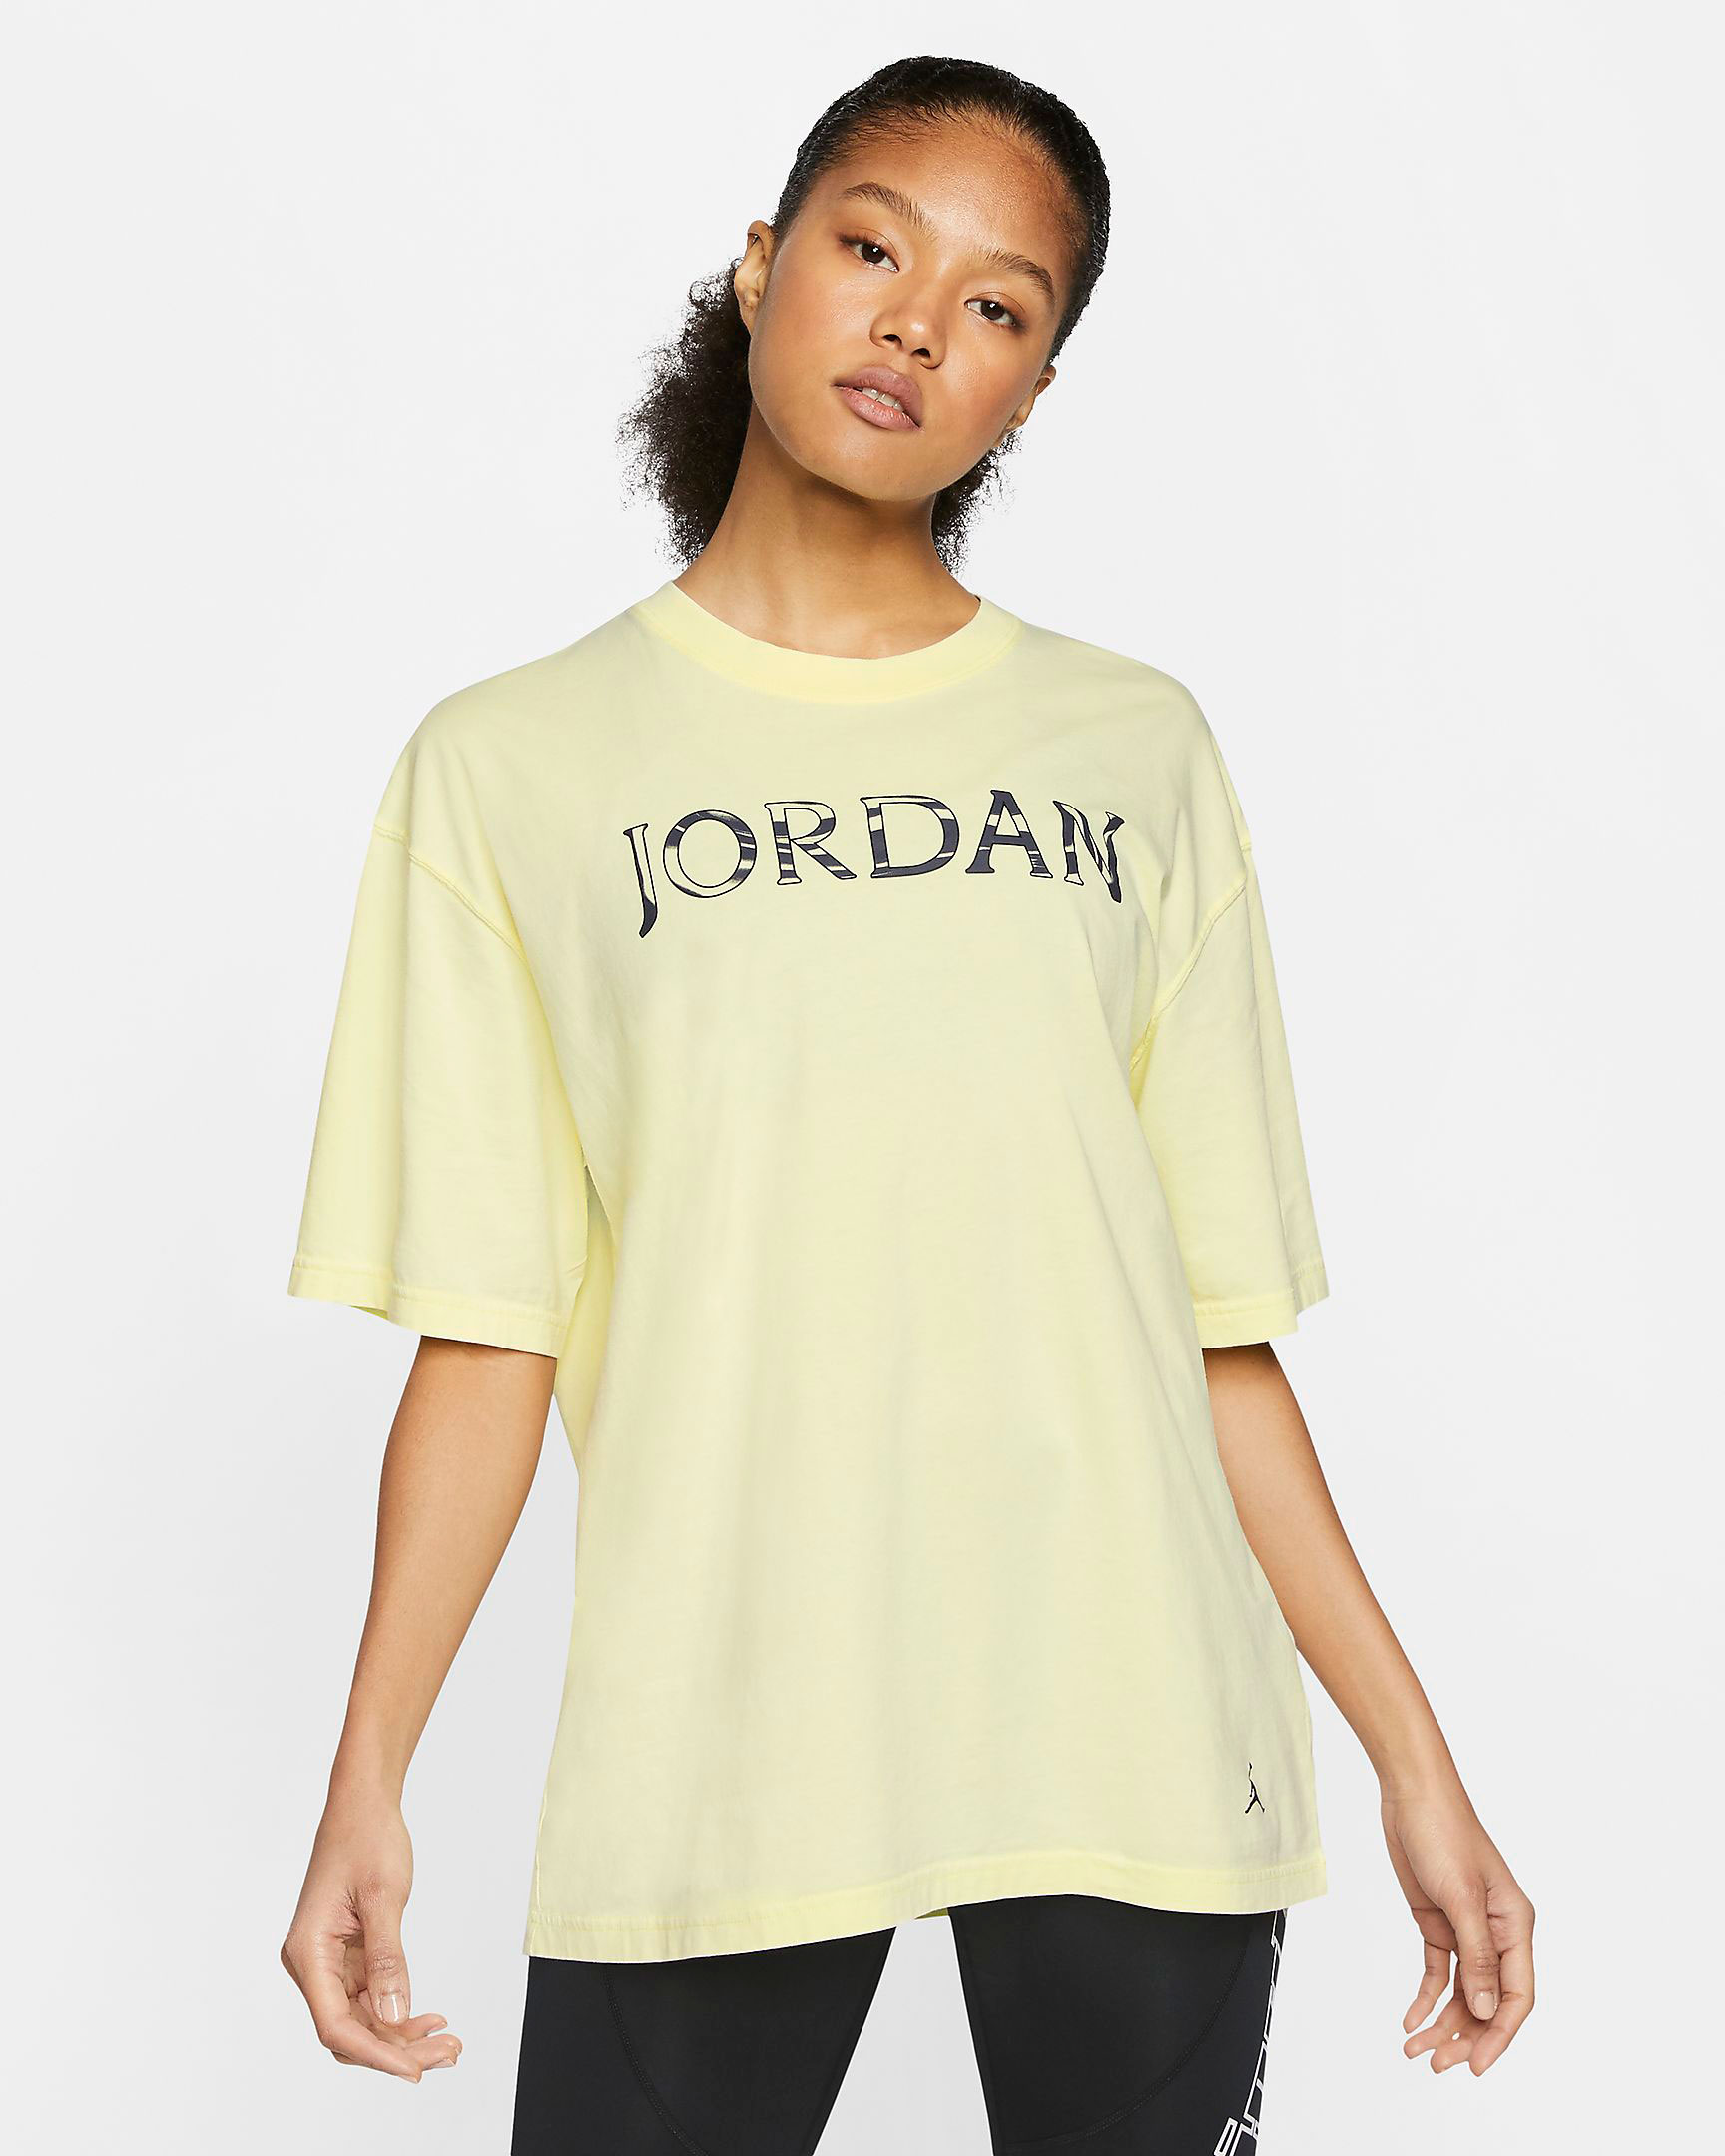 jordan-womens-utility-tee-shirt-yellow